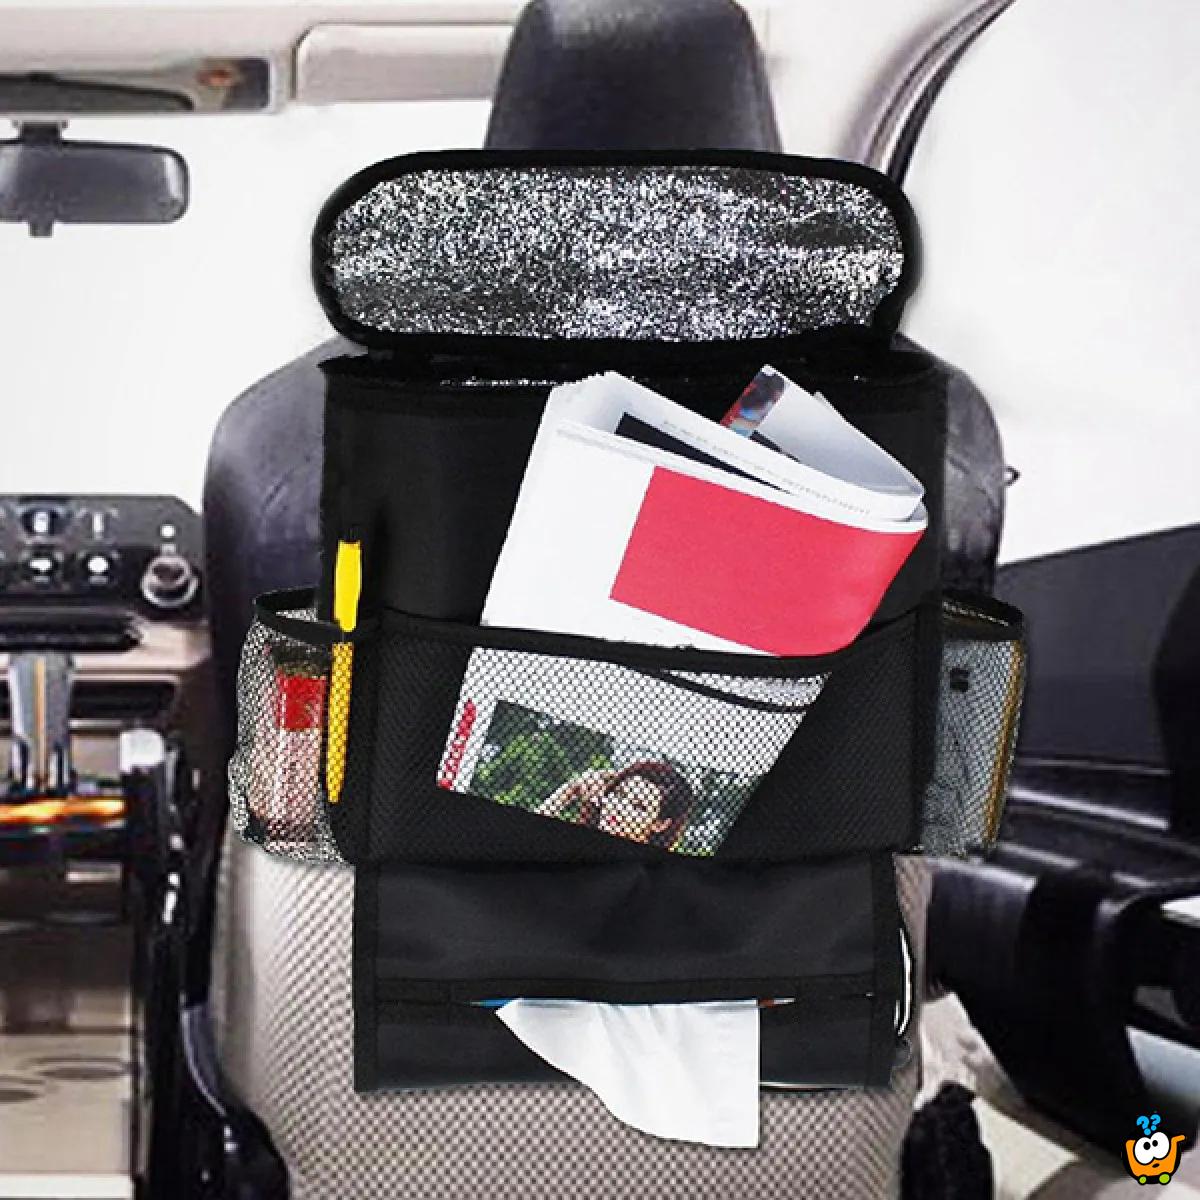 Bag for car seat - Multifunkcionalni organizer za auto sa termoizolacijom